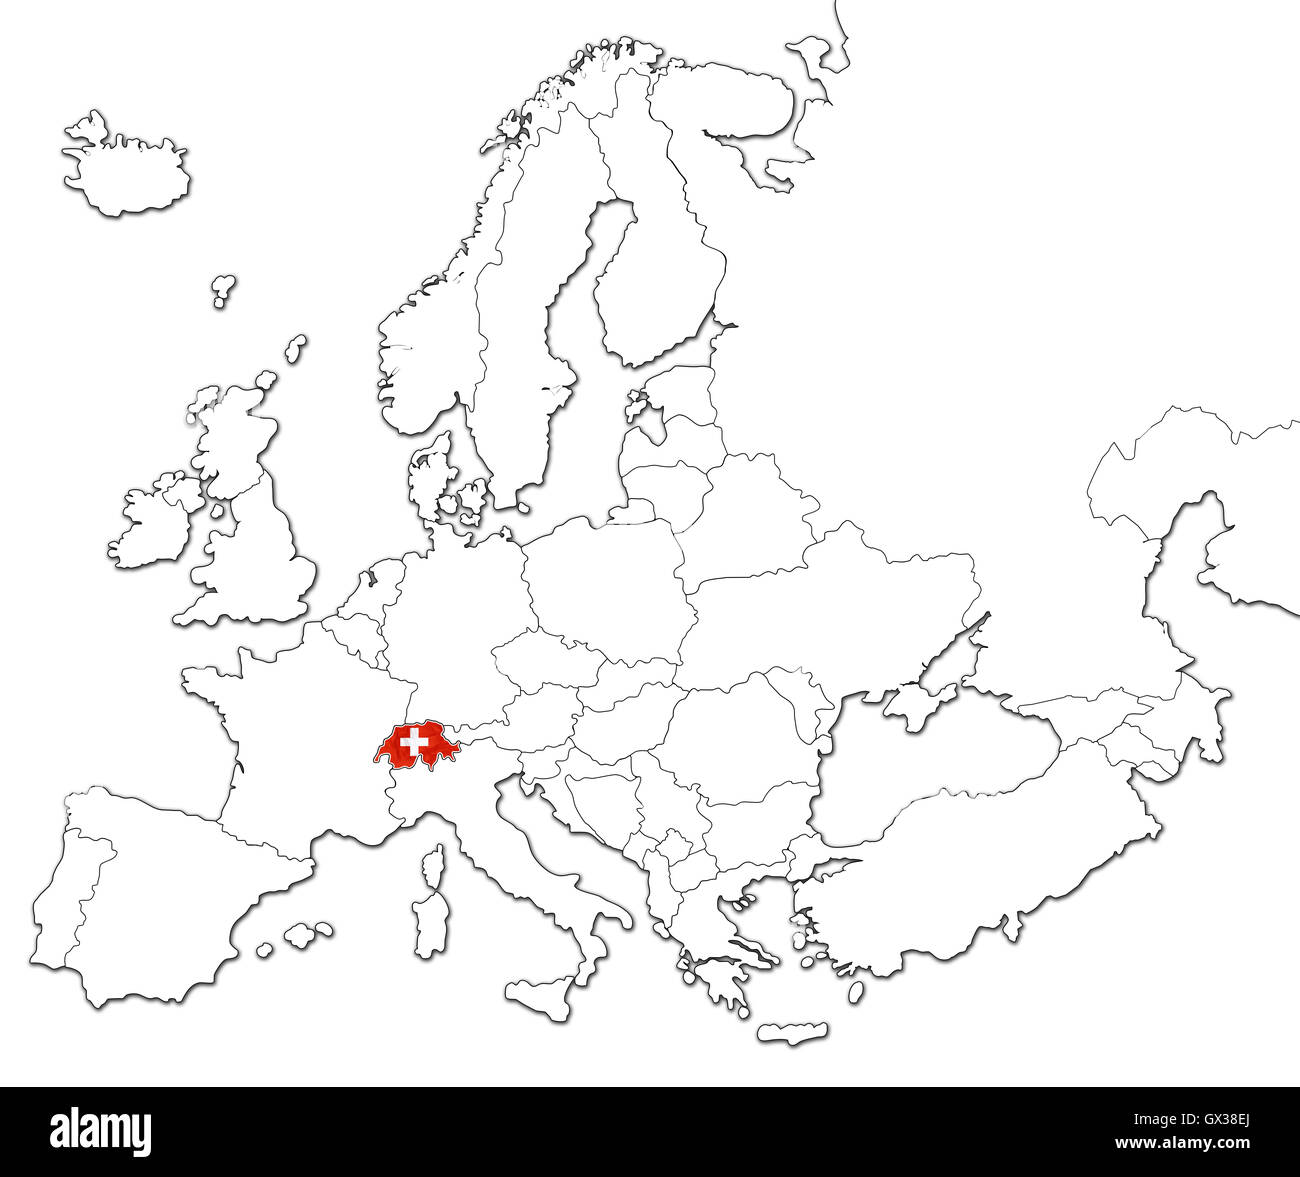 Karte der Schweiz Stockfotografie - Alamy